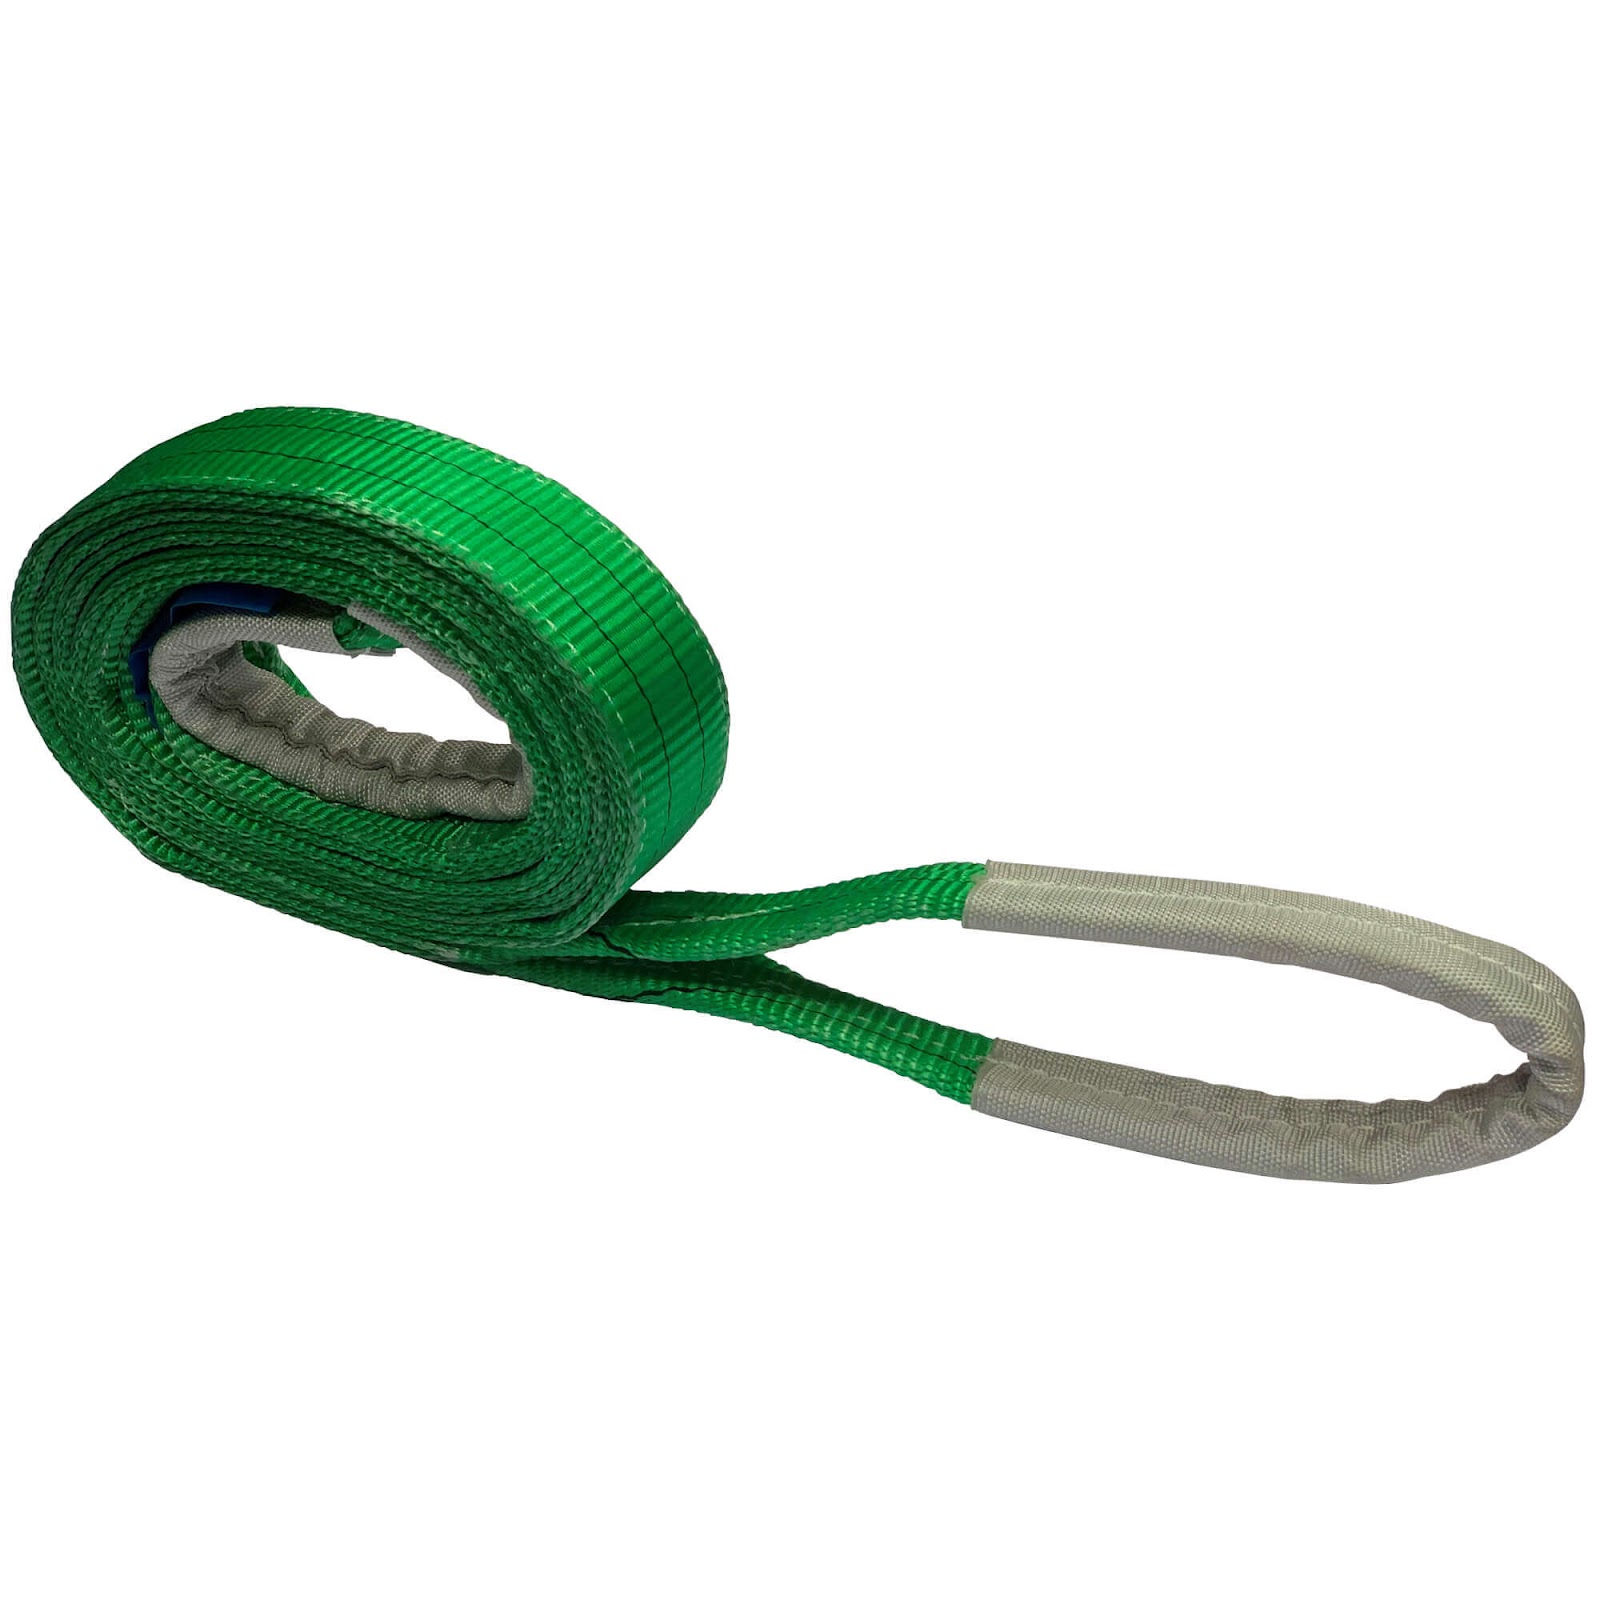  Webbing sling, lifting sling strap Safety factor of 6-1-Green Color Double Ply Webbing Slings Flat Belt